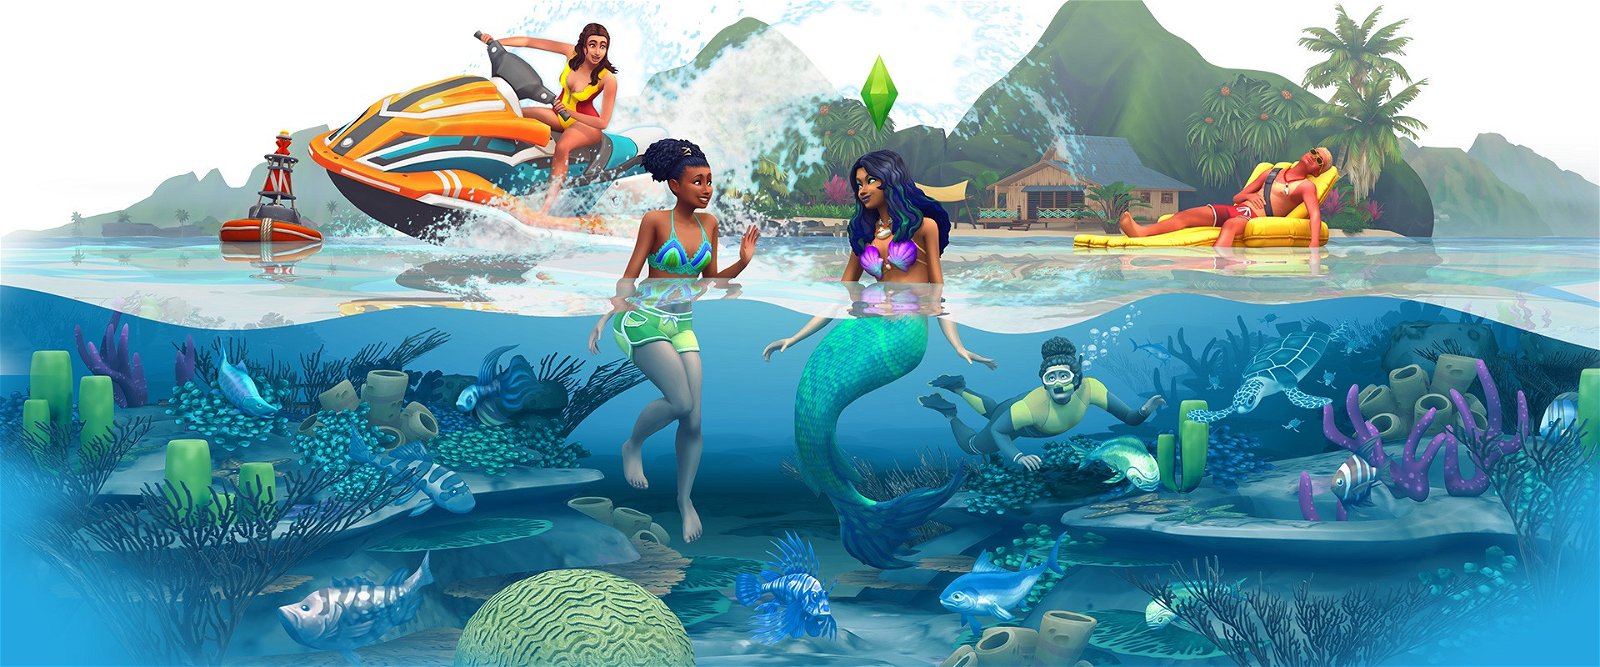 The Sims 4 si rinnova: nuovi menu, Create-A-Sim Story, oltre 1.000 oggetti